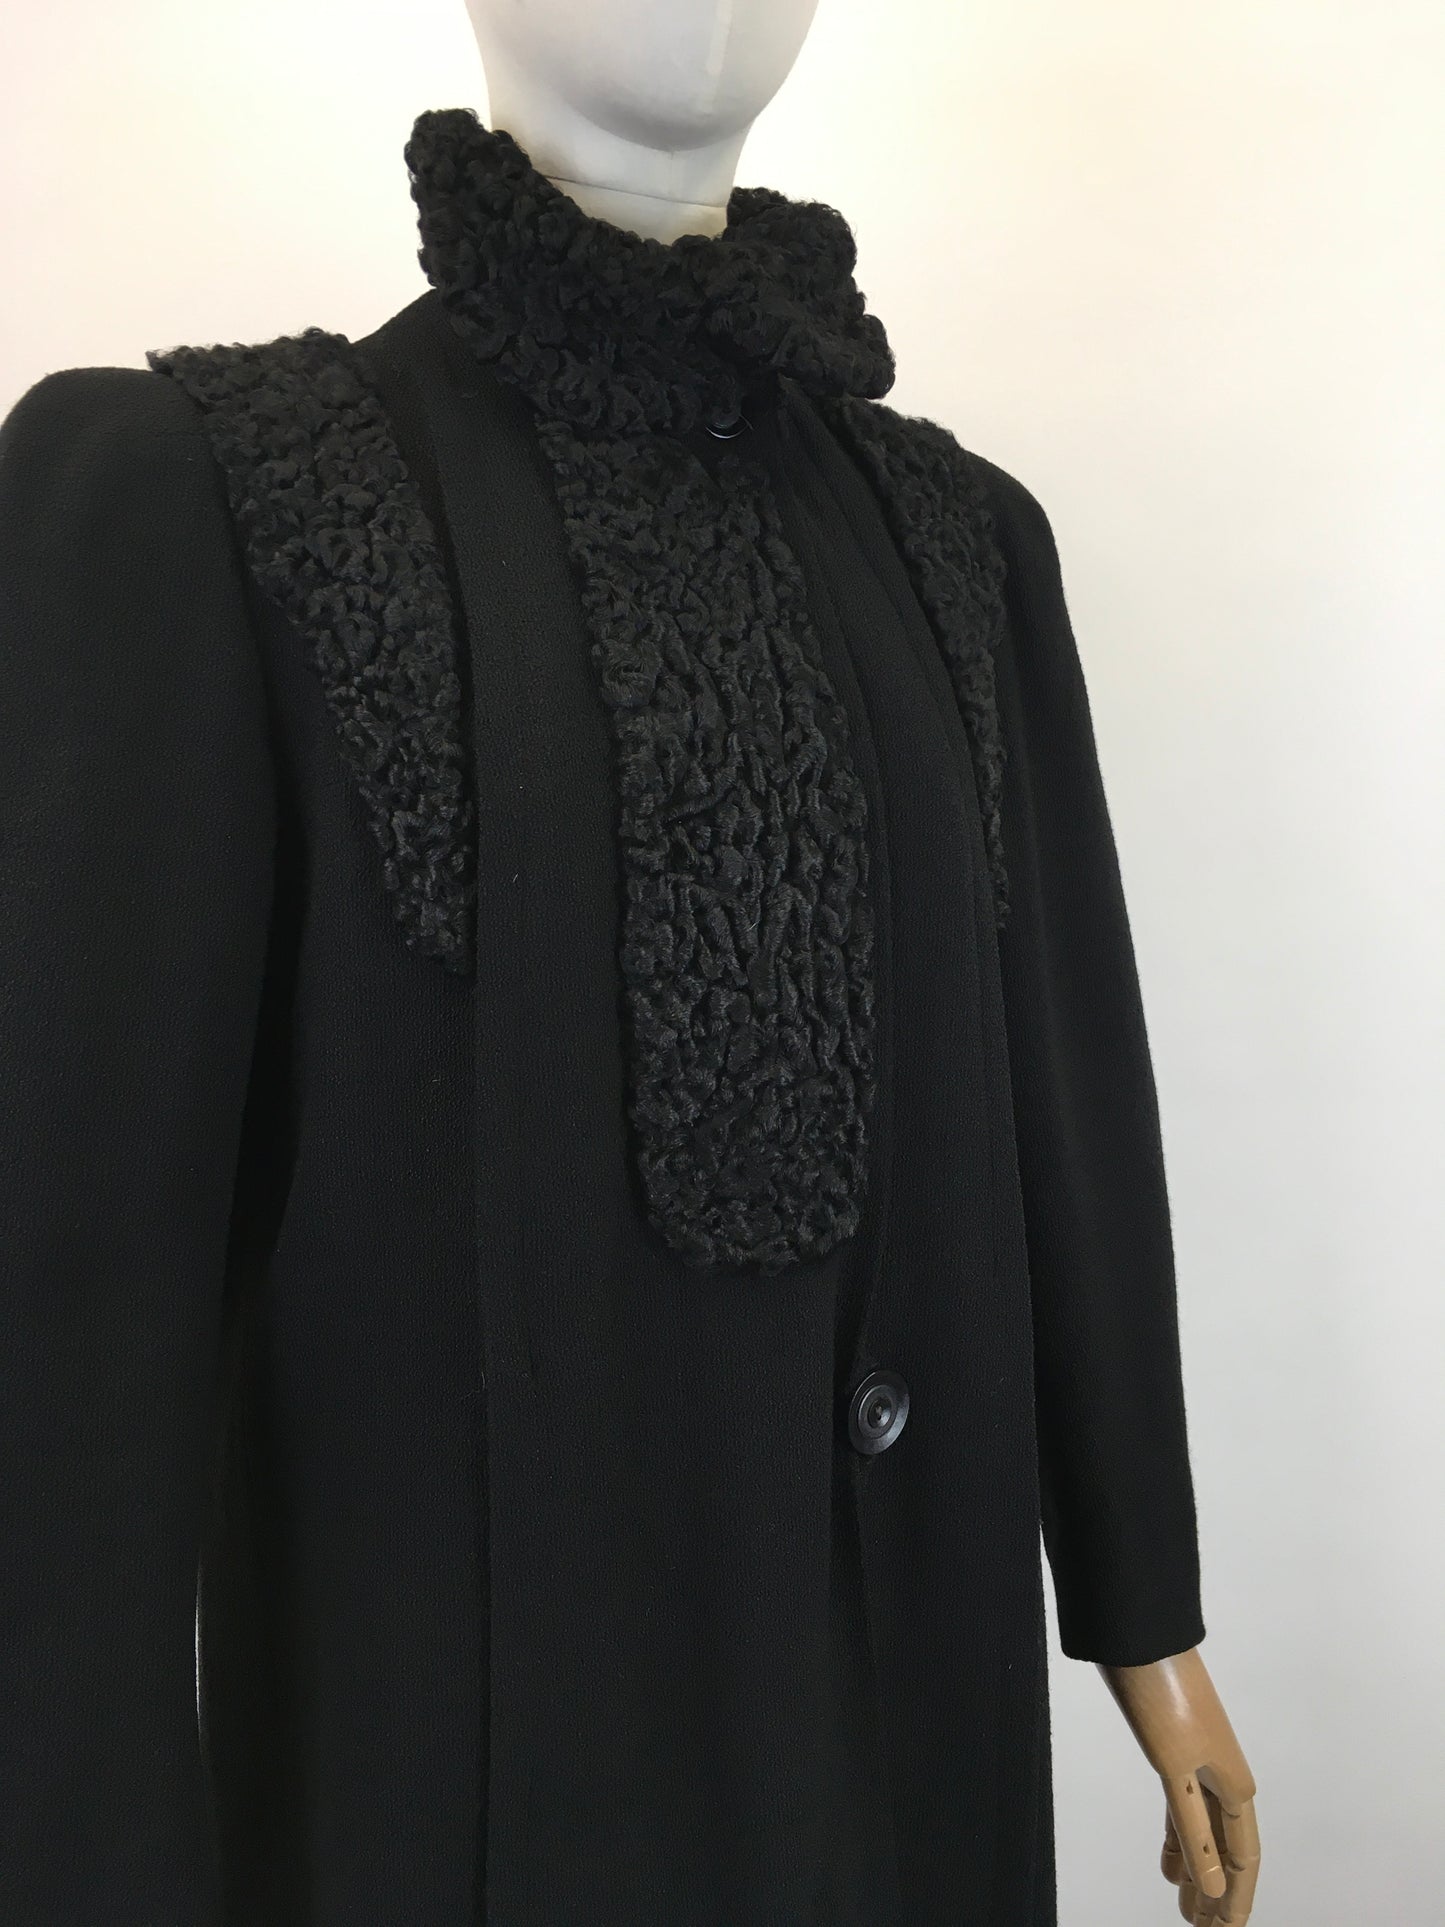 Original 1930's Sensational Black Coat - With Stunning Astrakhan Collar & Yokes